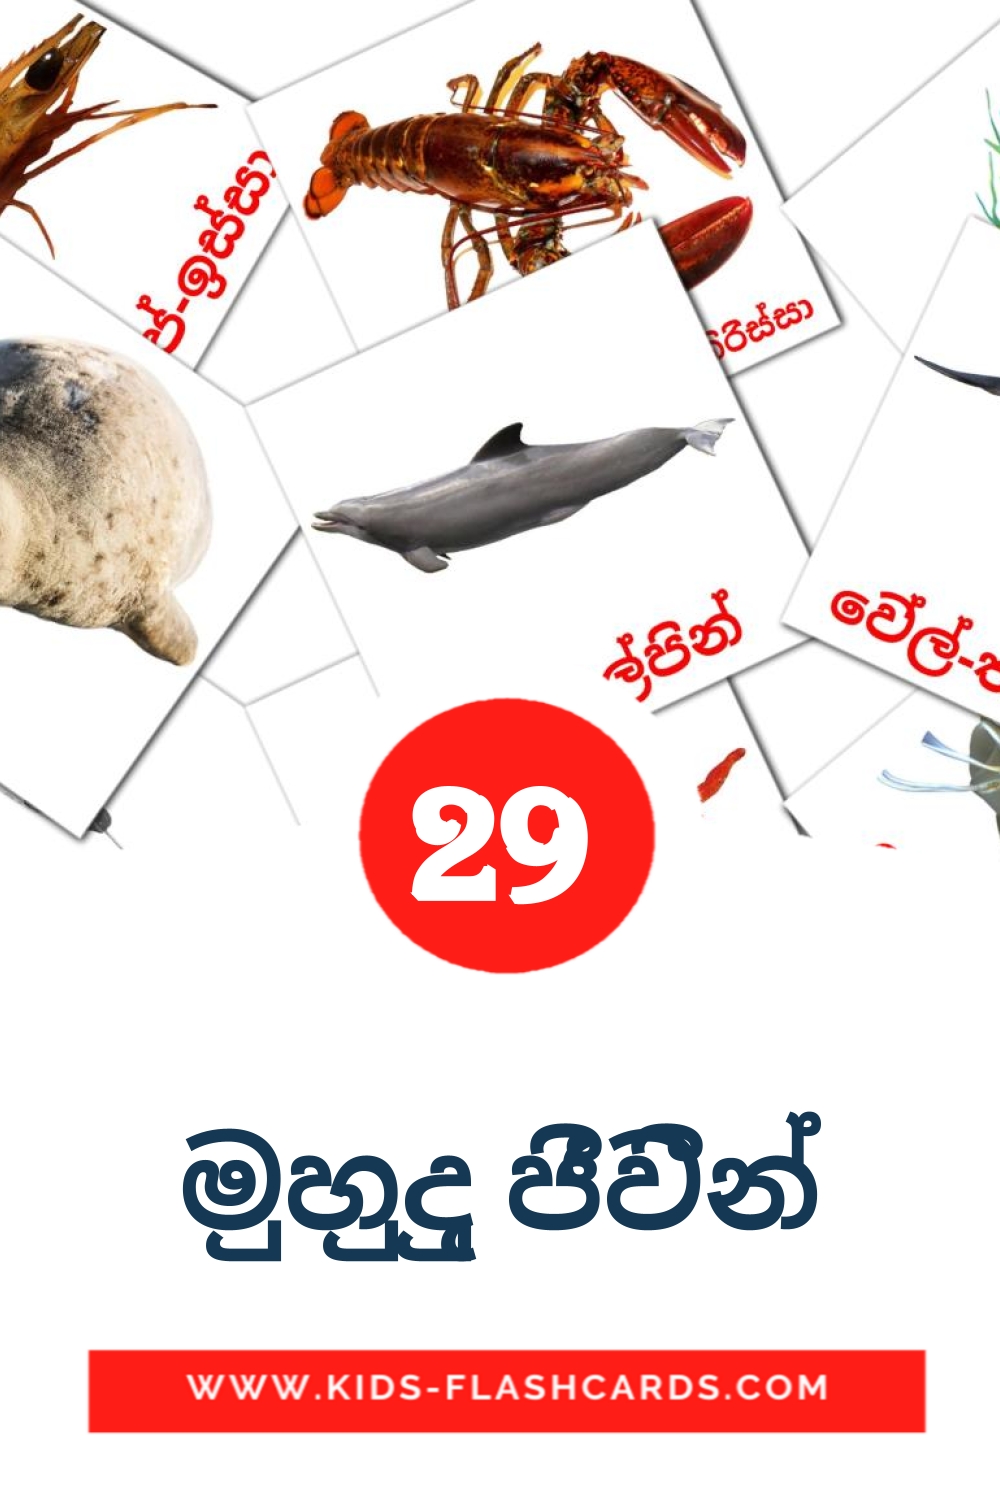 29 carte illustrate di මුහුදු ජීවීන් per la scuola materna in singalese